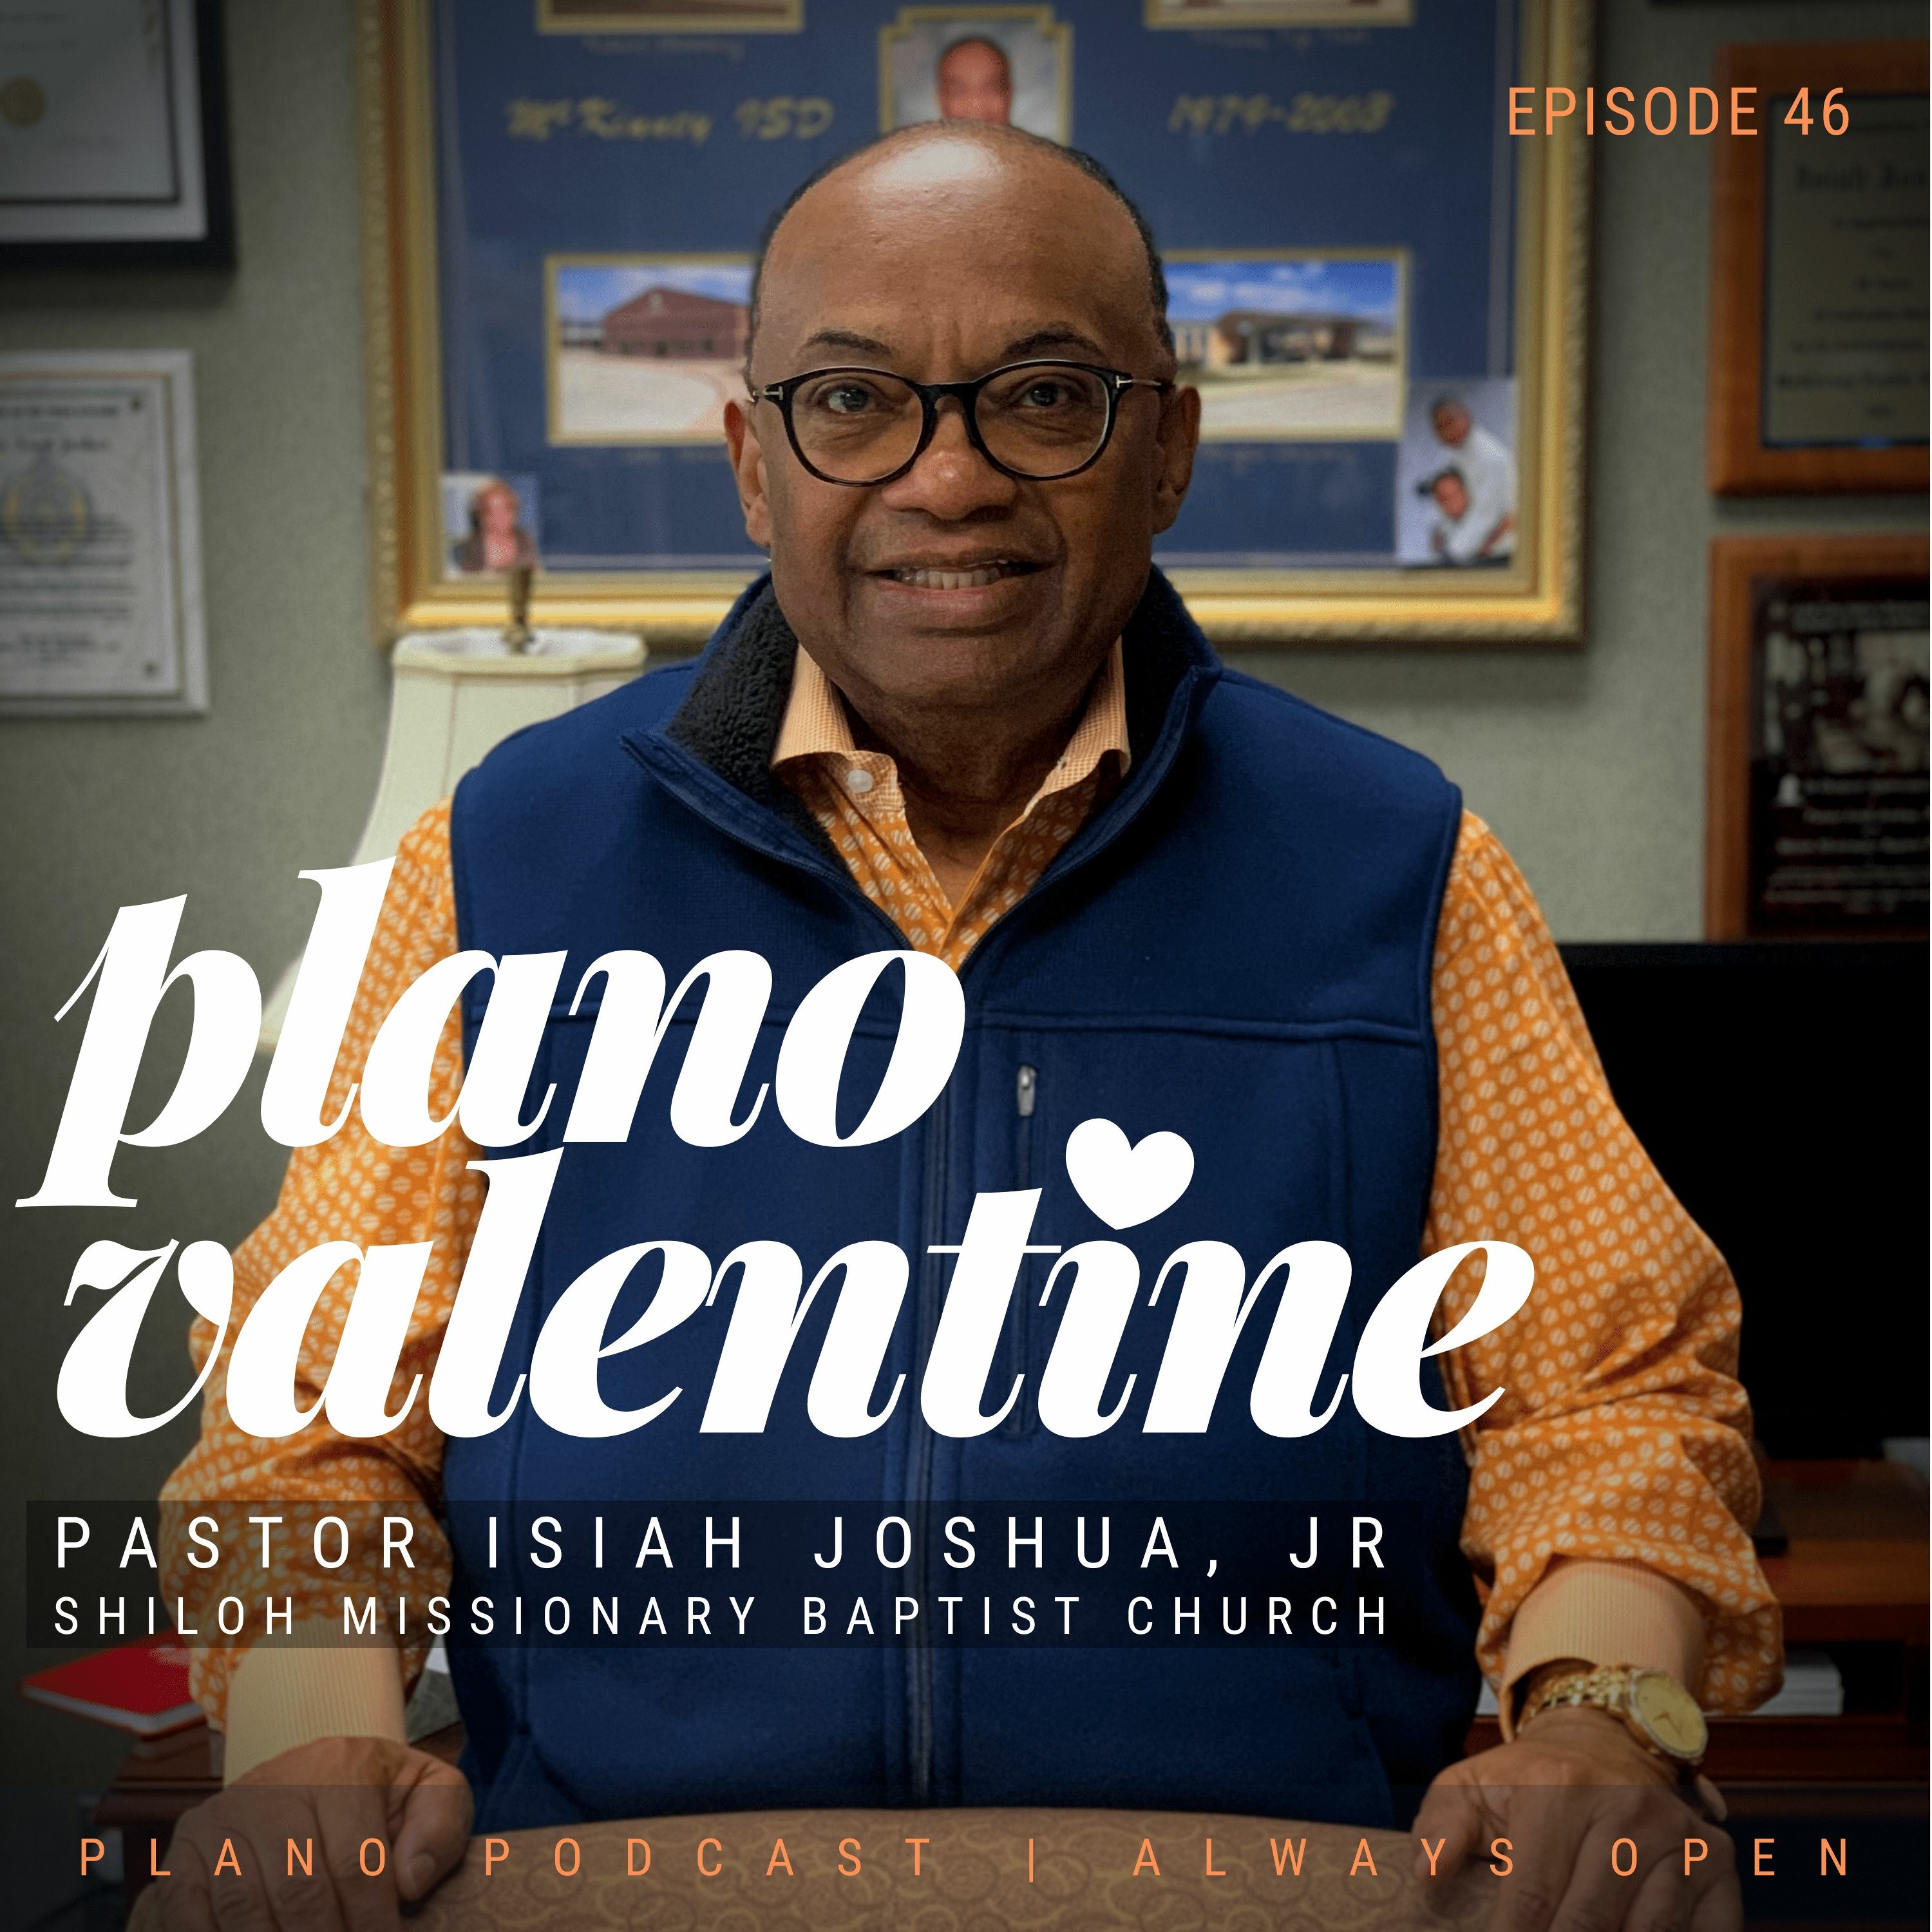 Episode 46 | Plano Valentine | Isiah Joshua Jr